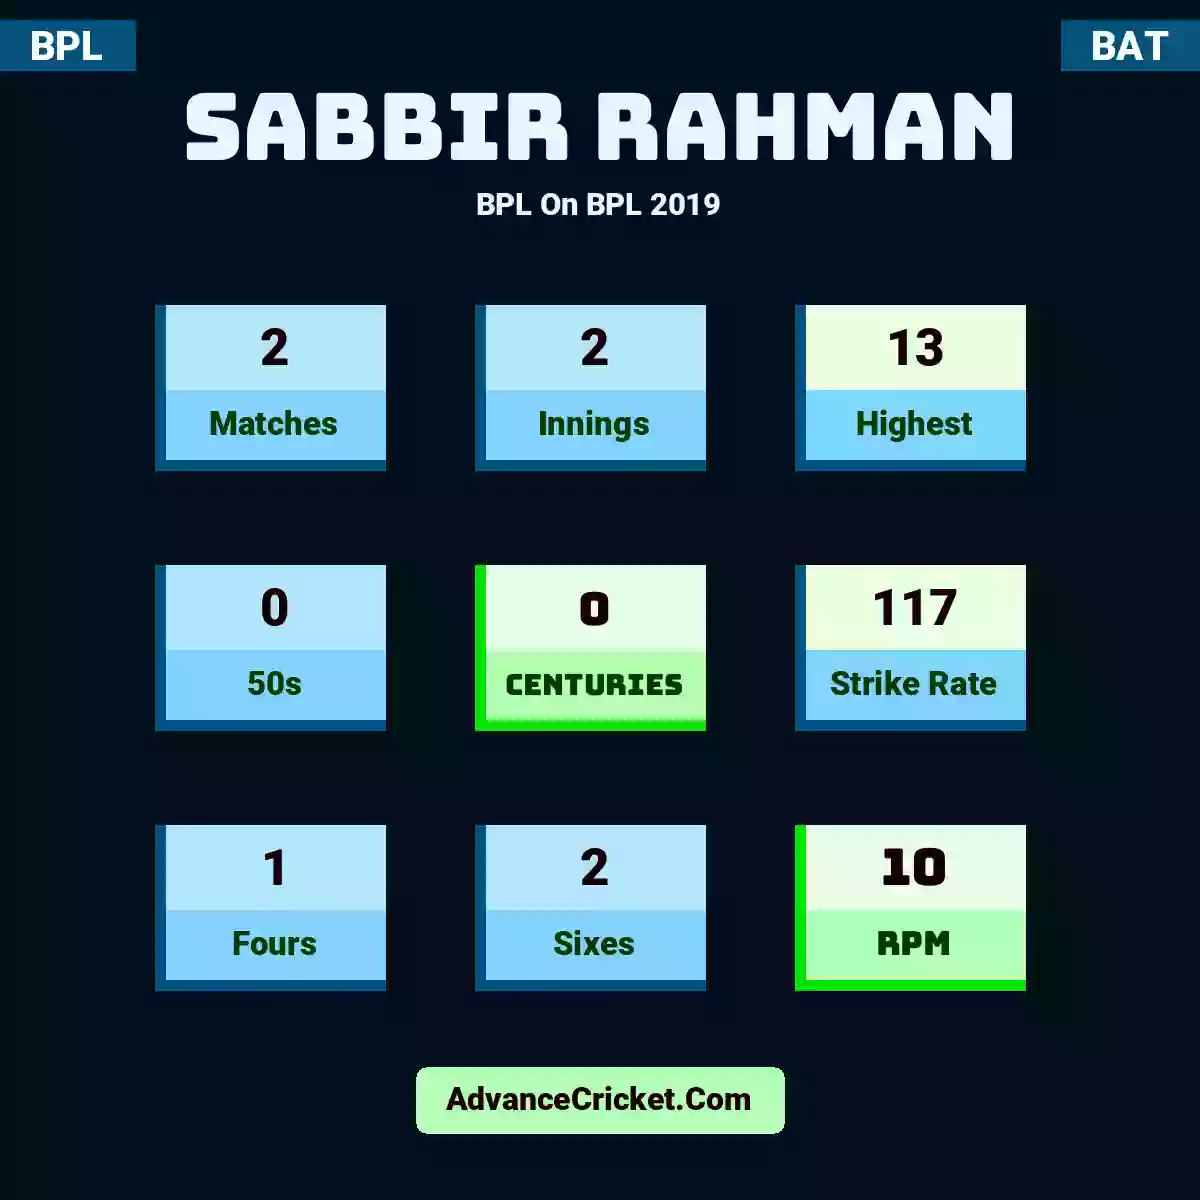 Sabbir Rahman BPL  On BPL 2019, Sabbir Rahman played 2 matches, scored 13 runs as highest, 0 half-centuries, and 0 centuries, with a strike rate of 117. S.Rahman hit 1 fours and 2 sixes, with an RPM of 10.